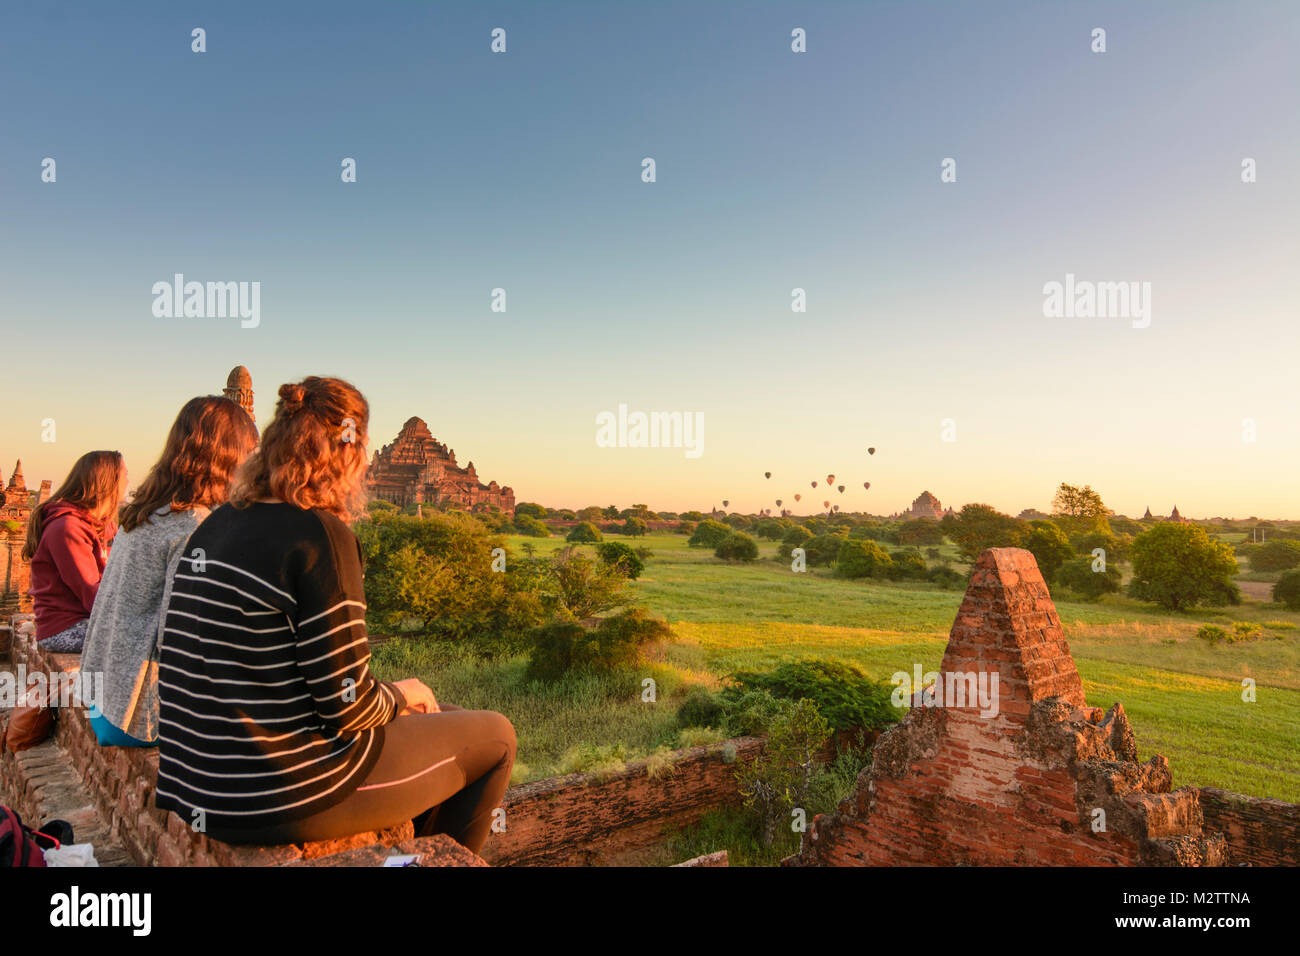 Bagan: Blick vom Tempel Taung Guni Paya, Touristen beobachten, Sonnenaufgang, Dhammayangyi Tempel, Tempeln, Stupas, Luftballons, Region, Mandalay, Myanmar (Birma) Stockfoto